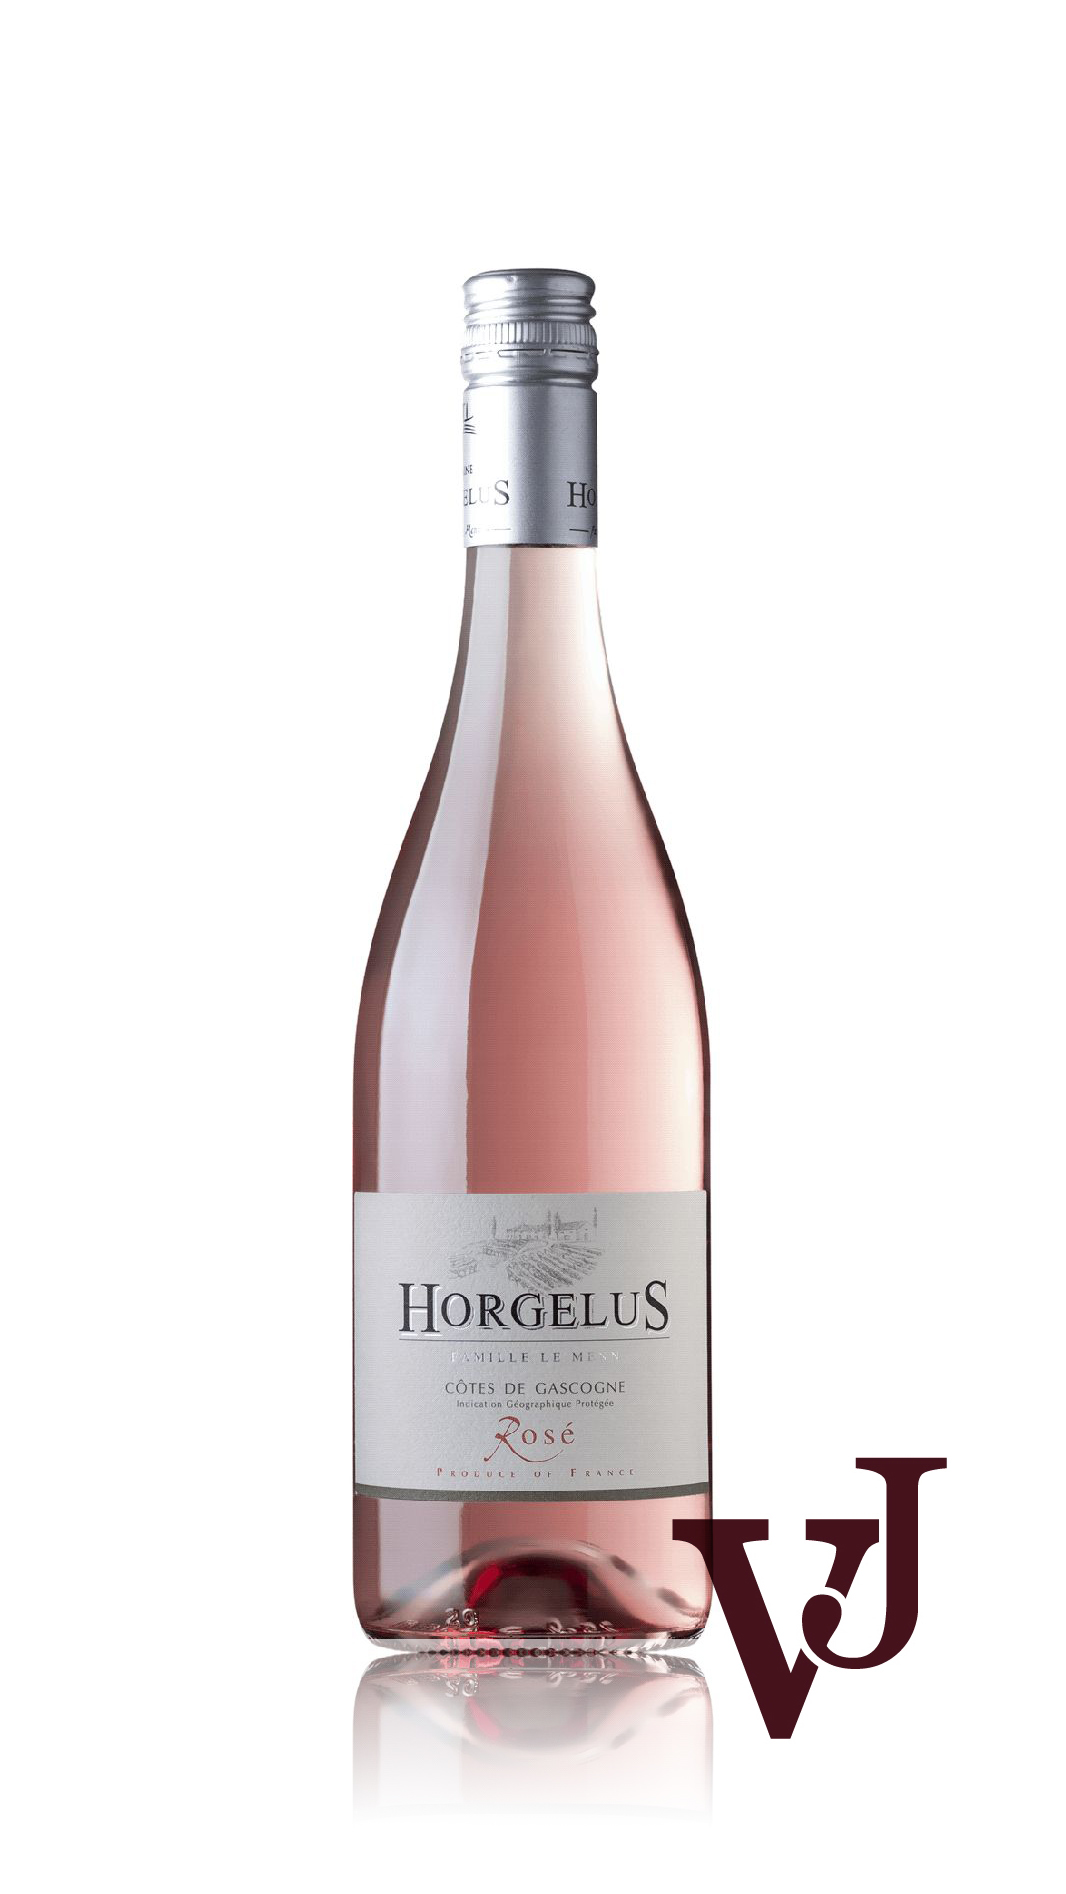 Rosé Vin - Domaine Horgelus Rosé artikel nummer 7282001 från producenten Domaine Horgelus/Earl Haut Cassou från området Frankrike